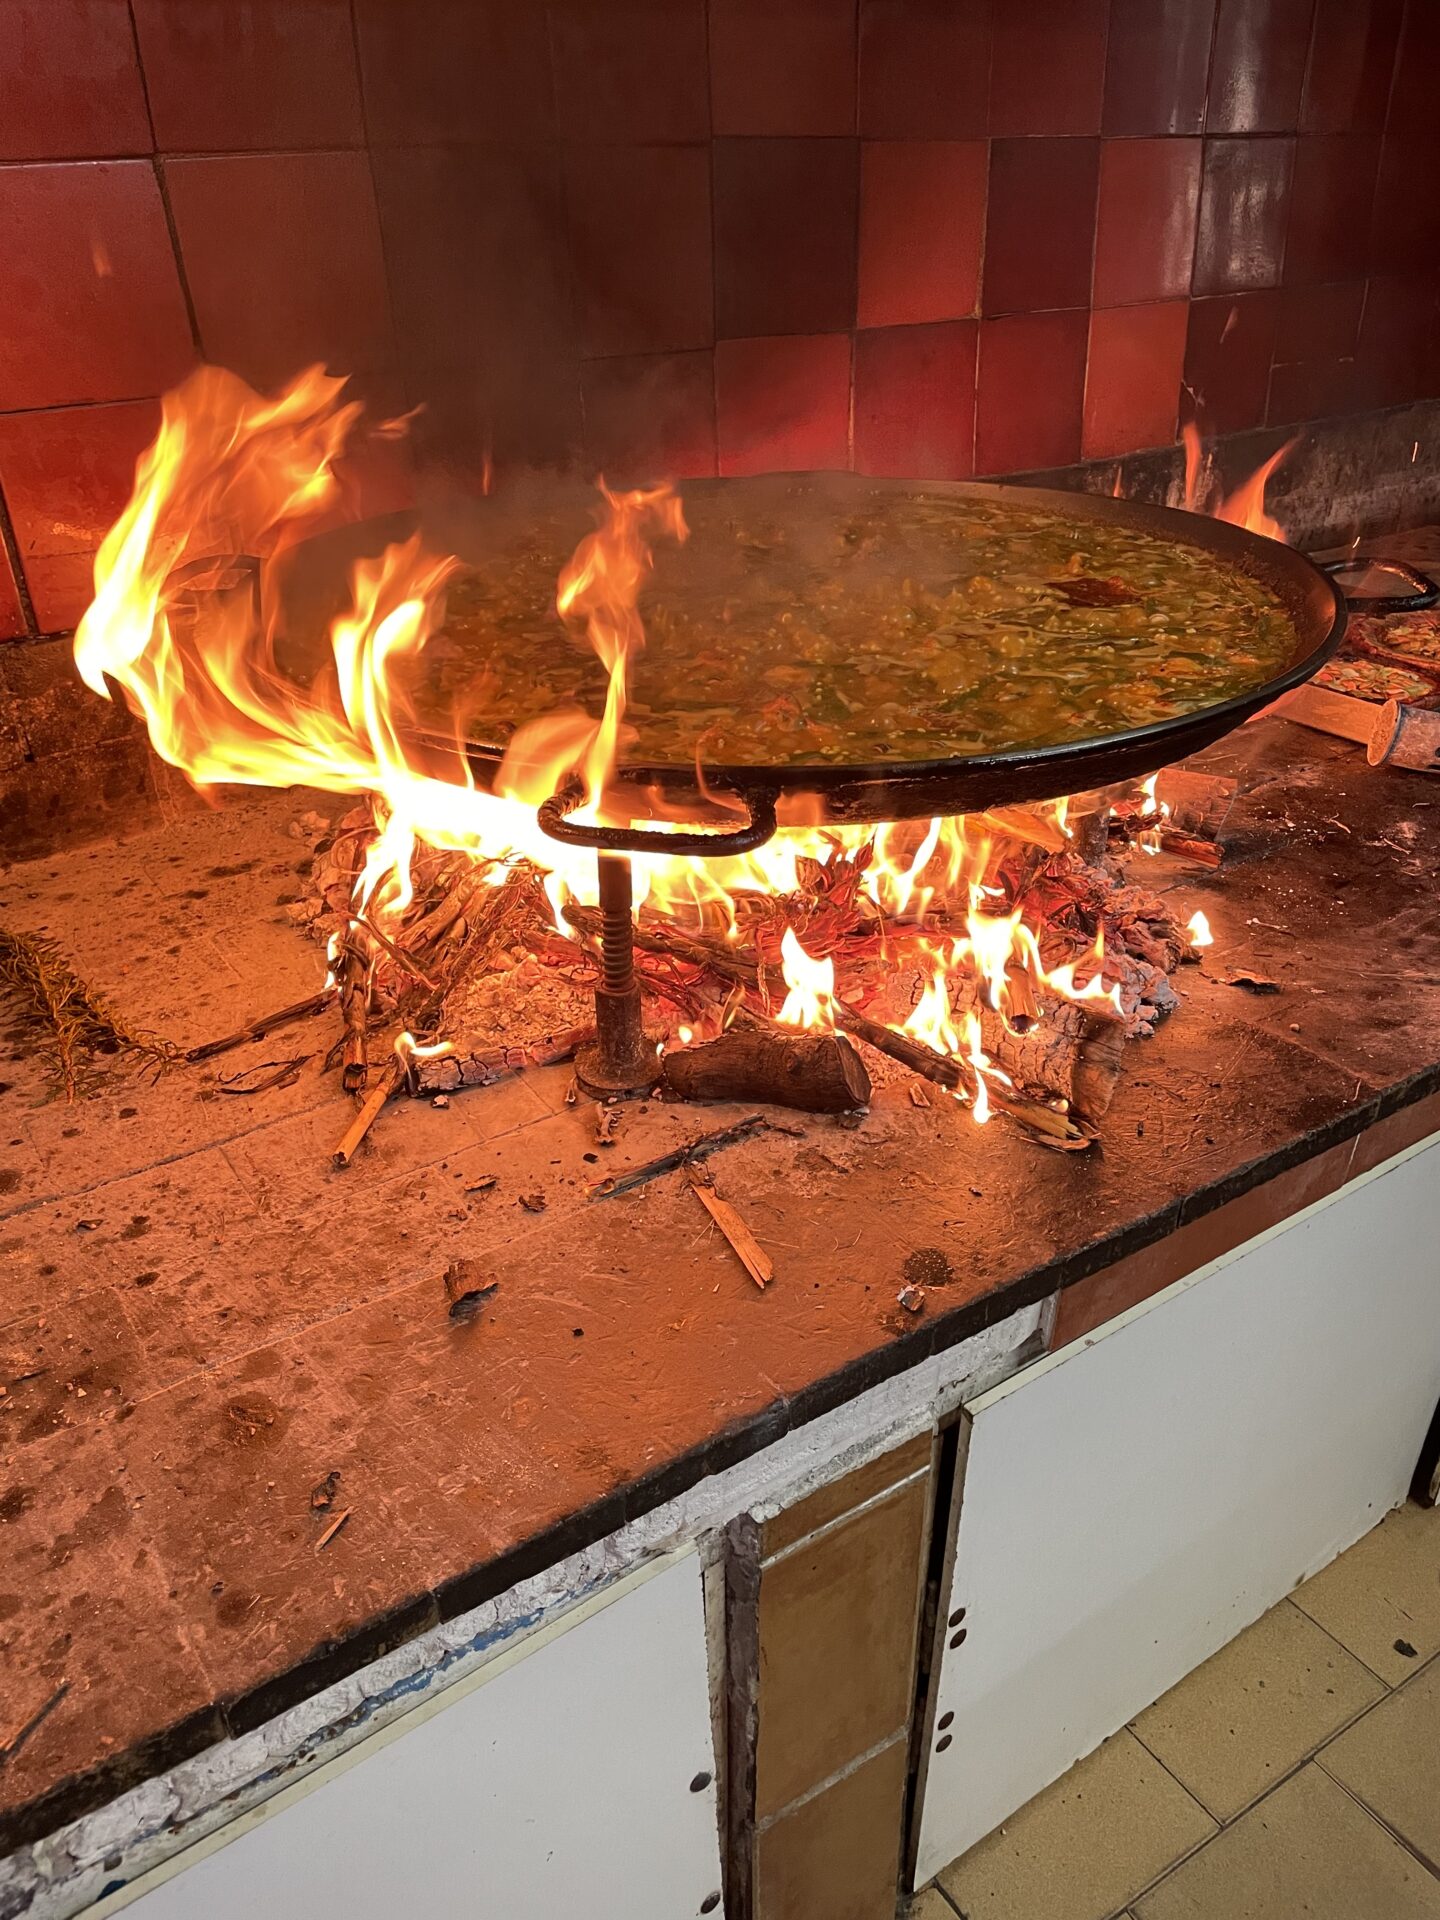 Echte paella in Valencia bij Barraca Toni Montoliu - Restaurant tips in Valencia - Foodblog Foodinista